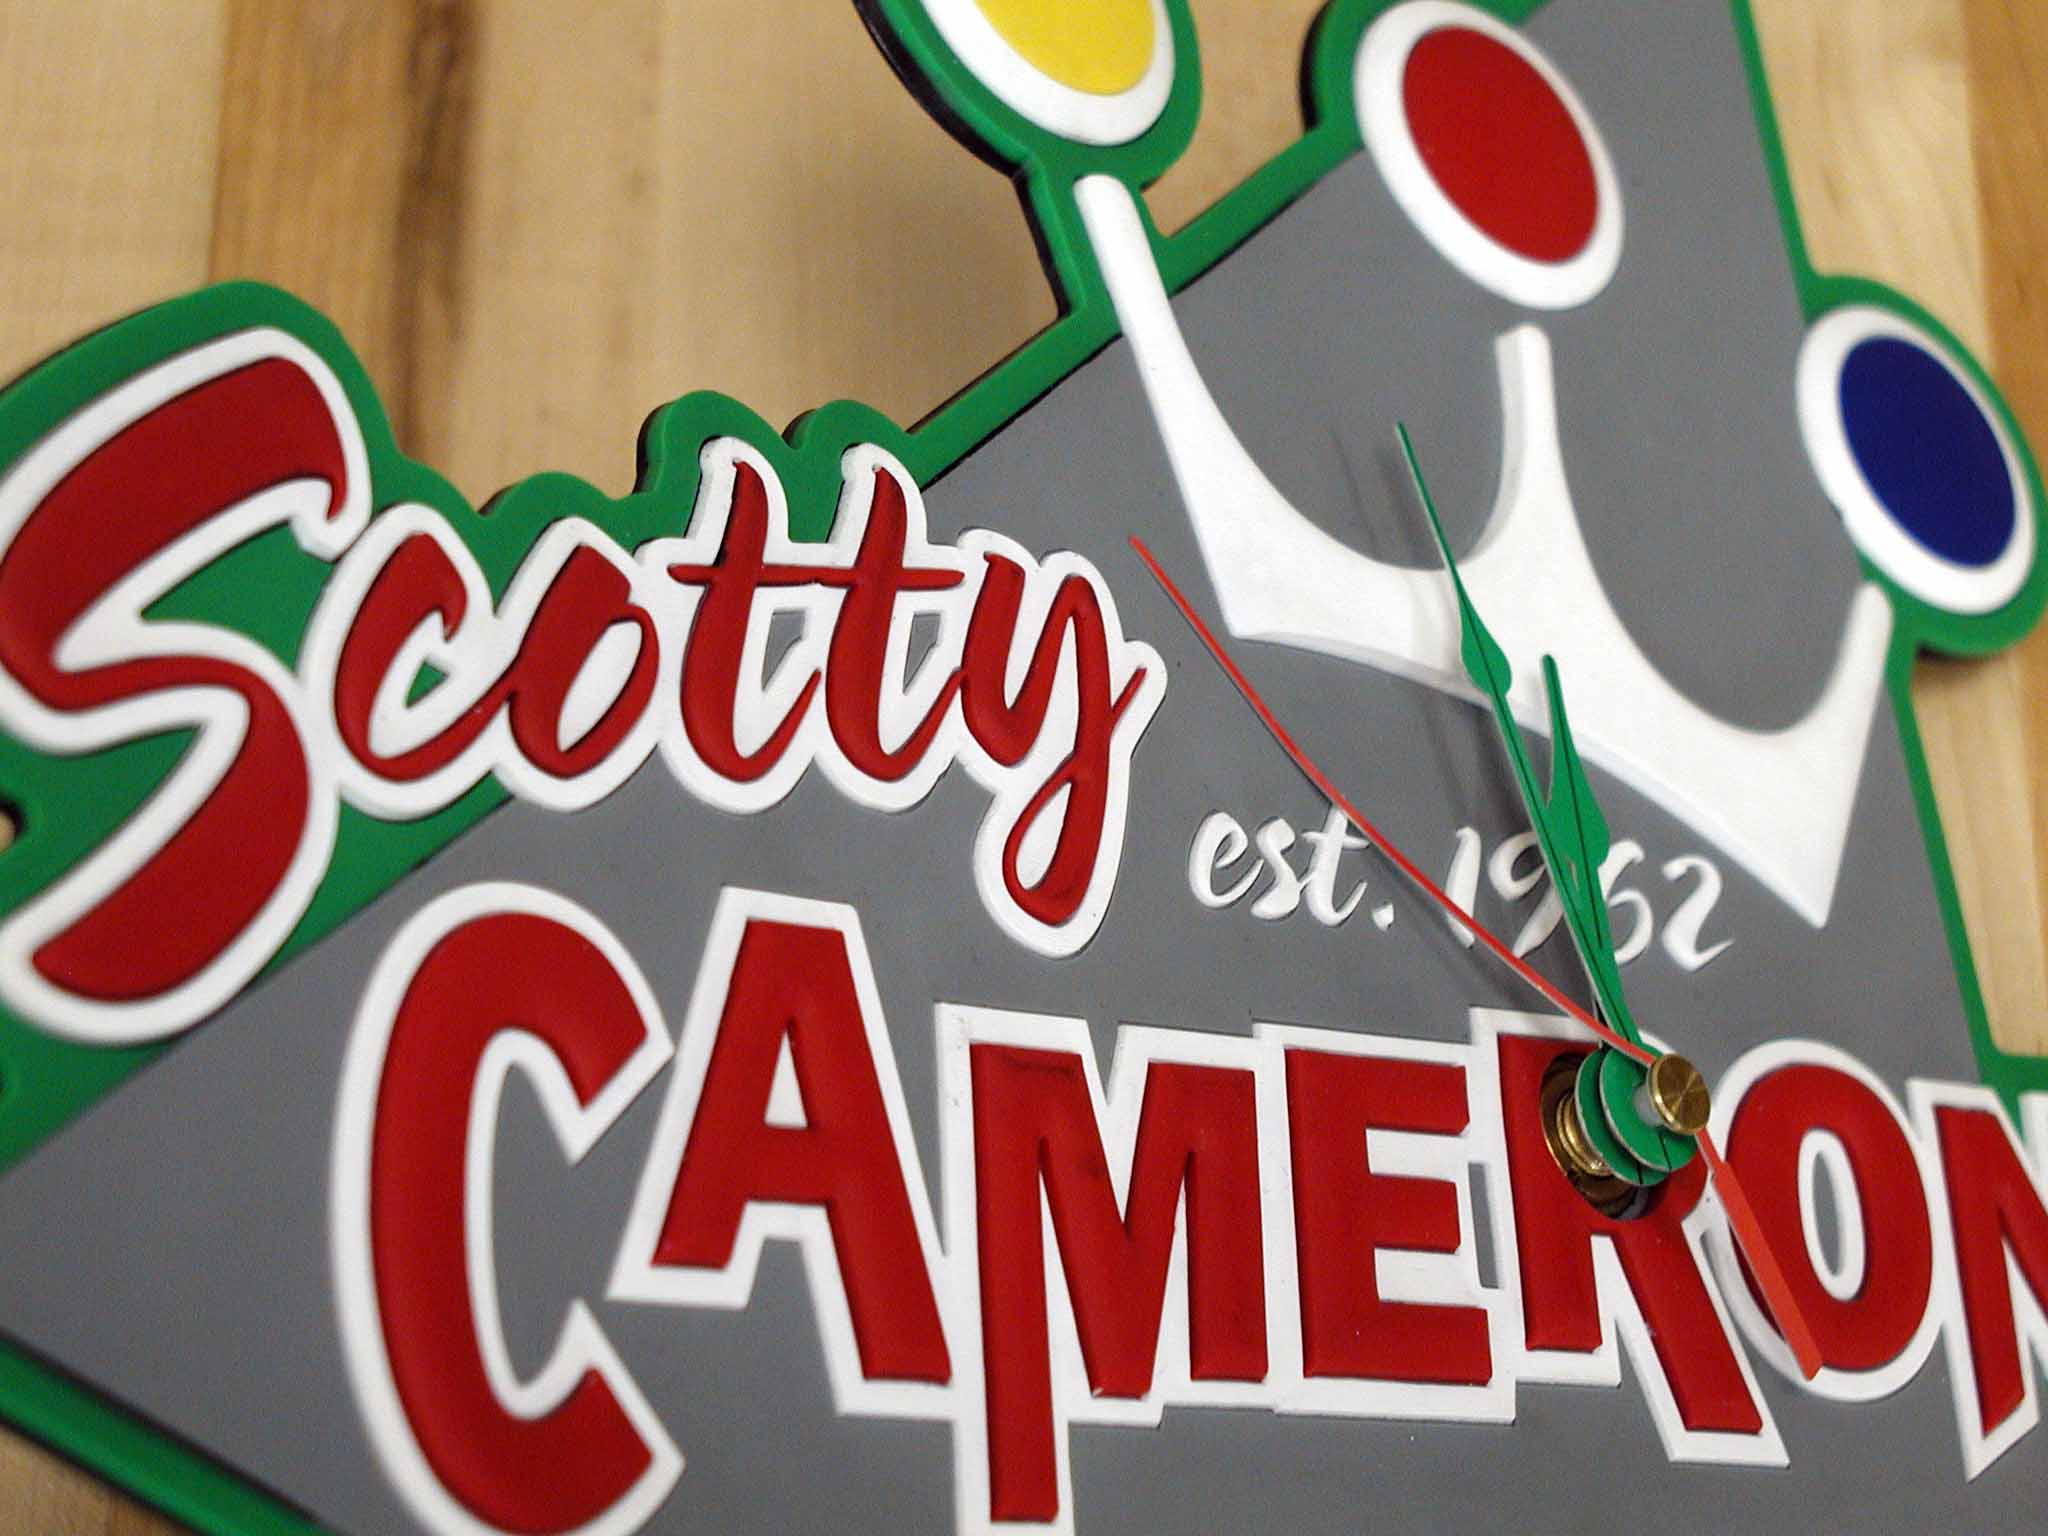 Scotty Cameron Wallpaper Details   scotty cameron